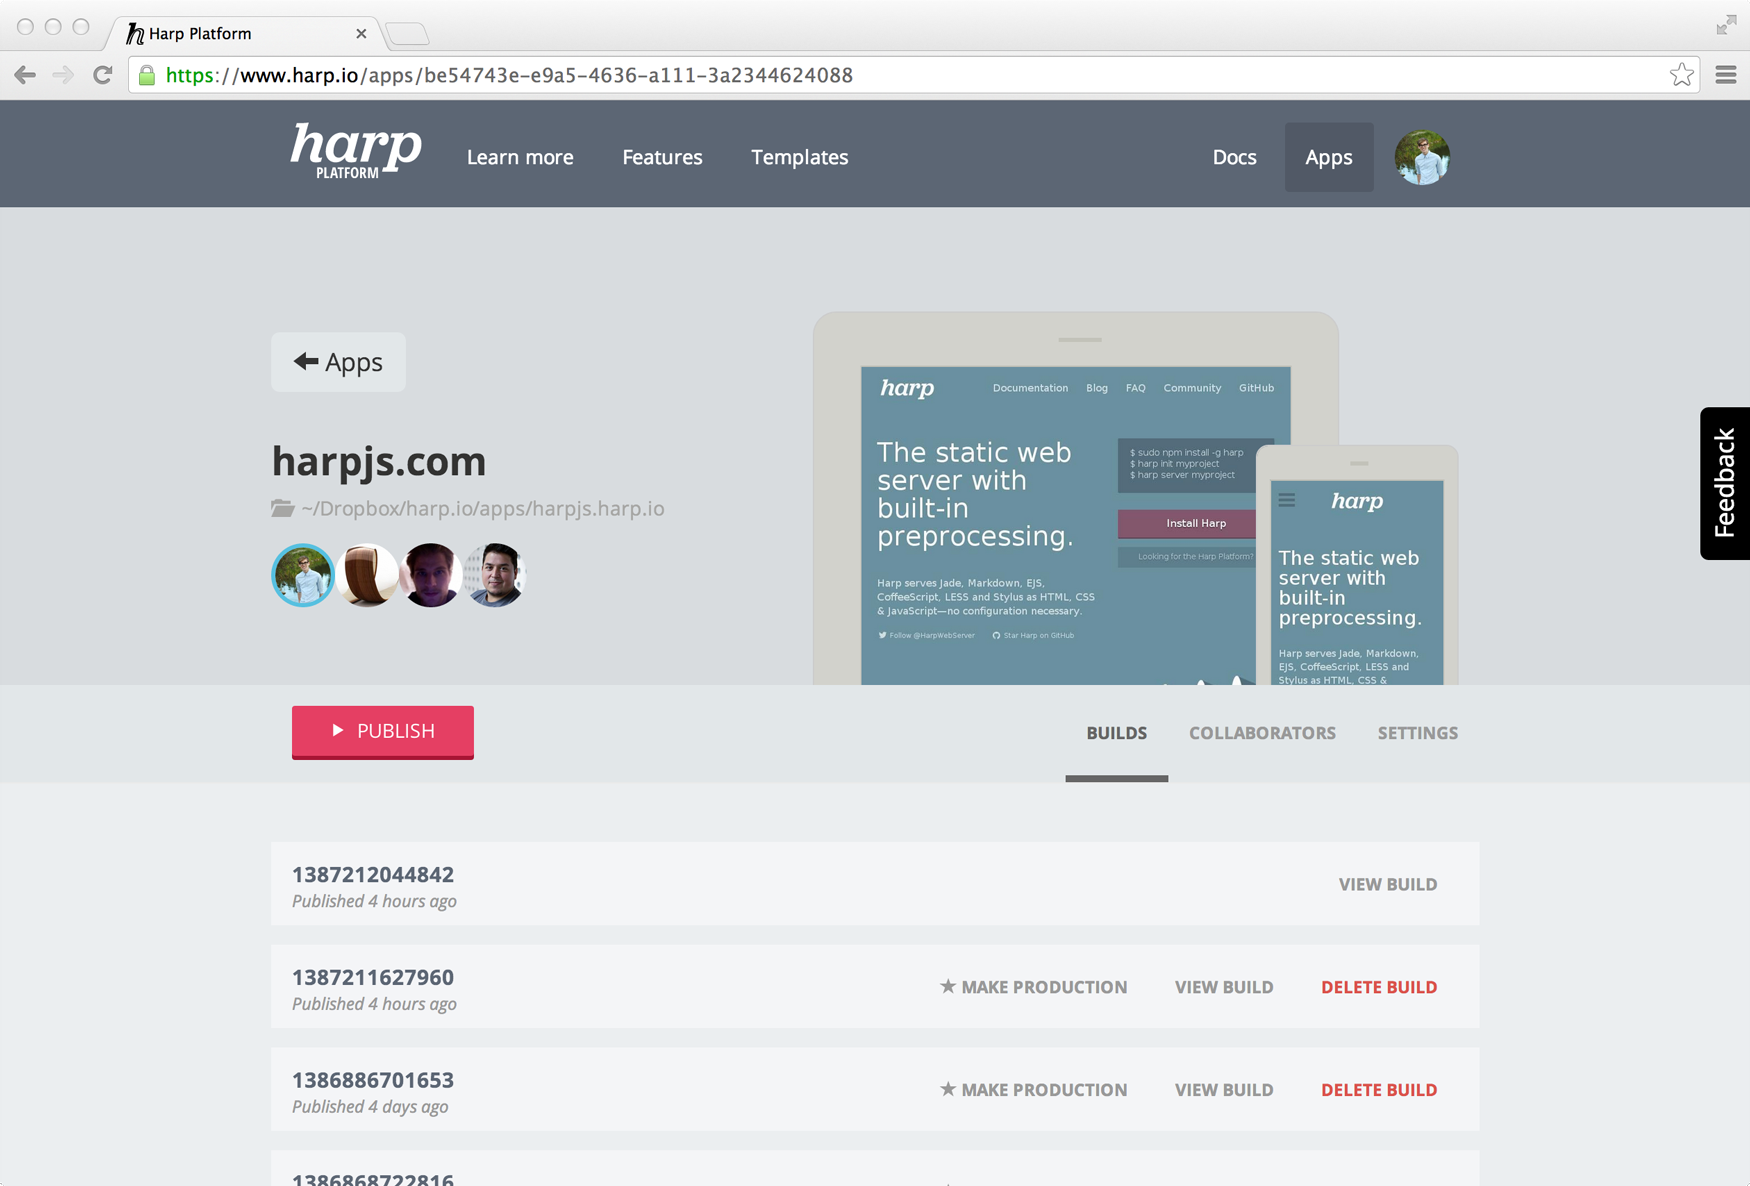 Harp Platform’s app view